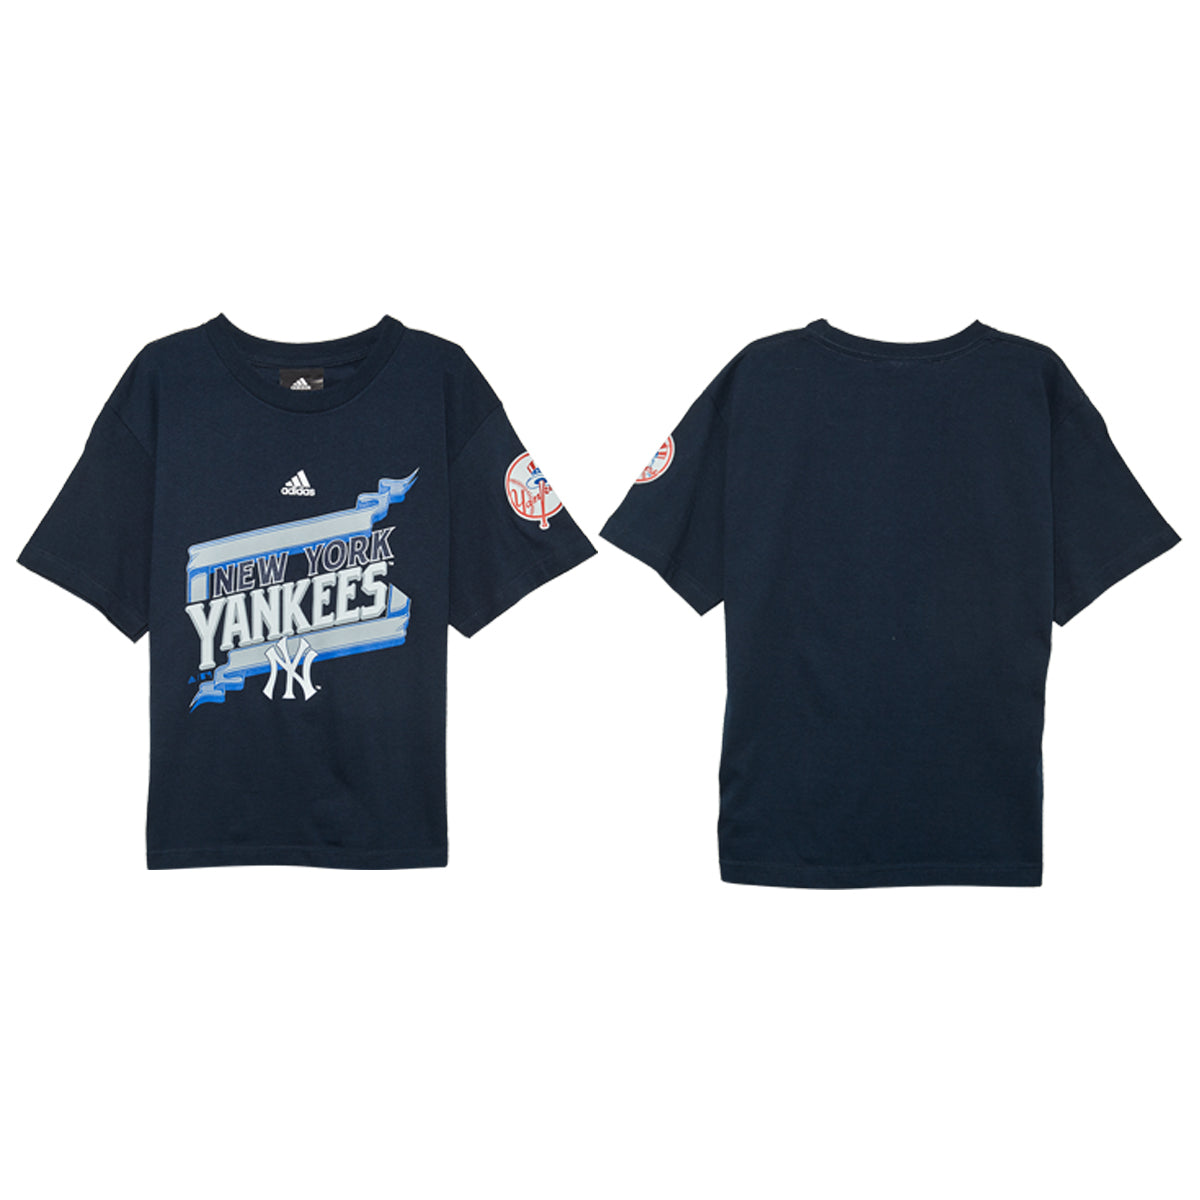 Adidas New York Yankees Mens Style : R8a3dlp02